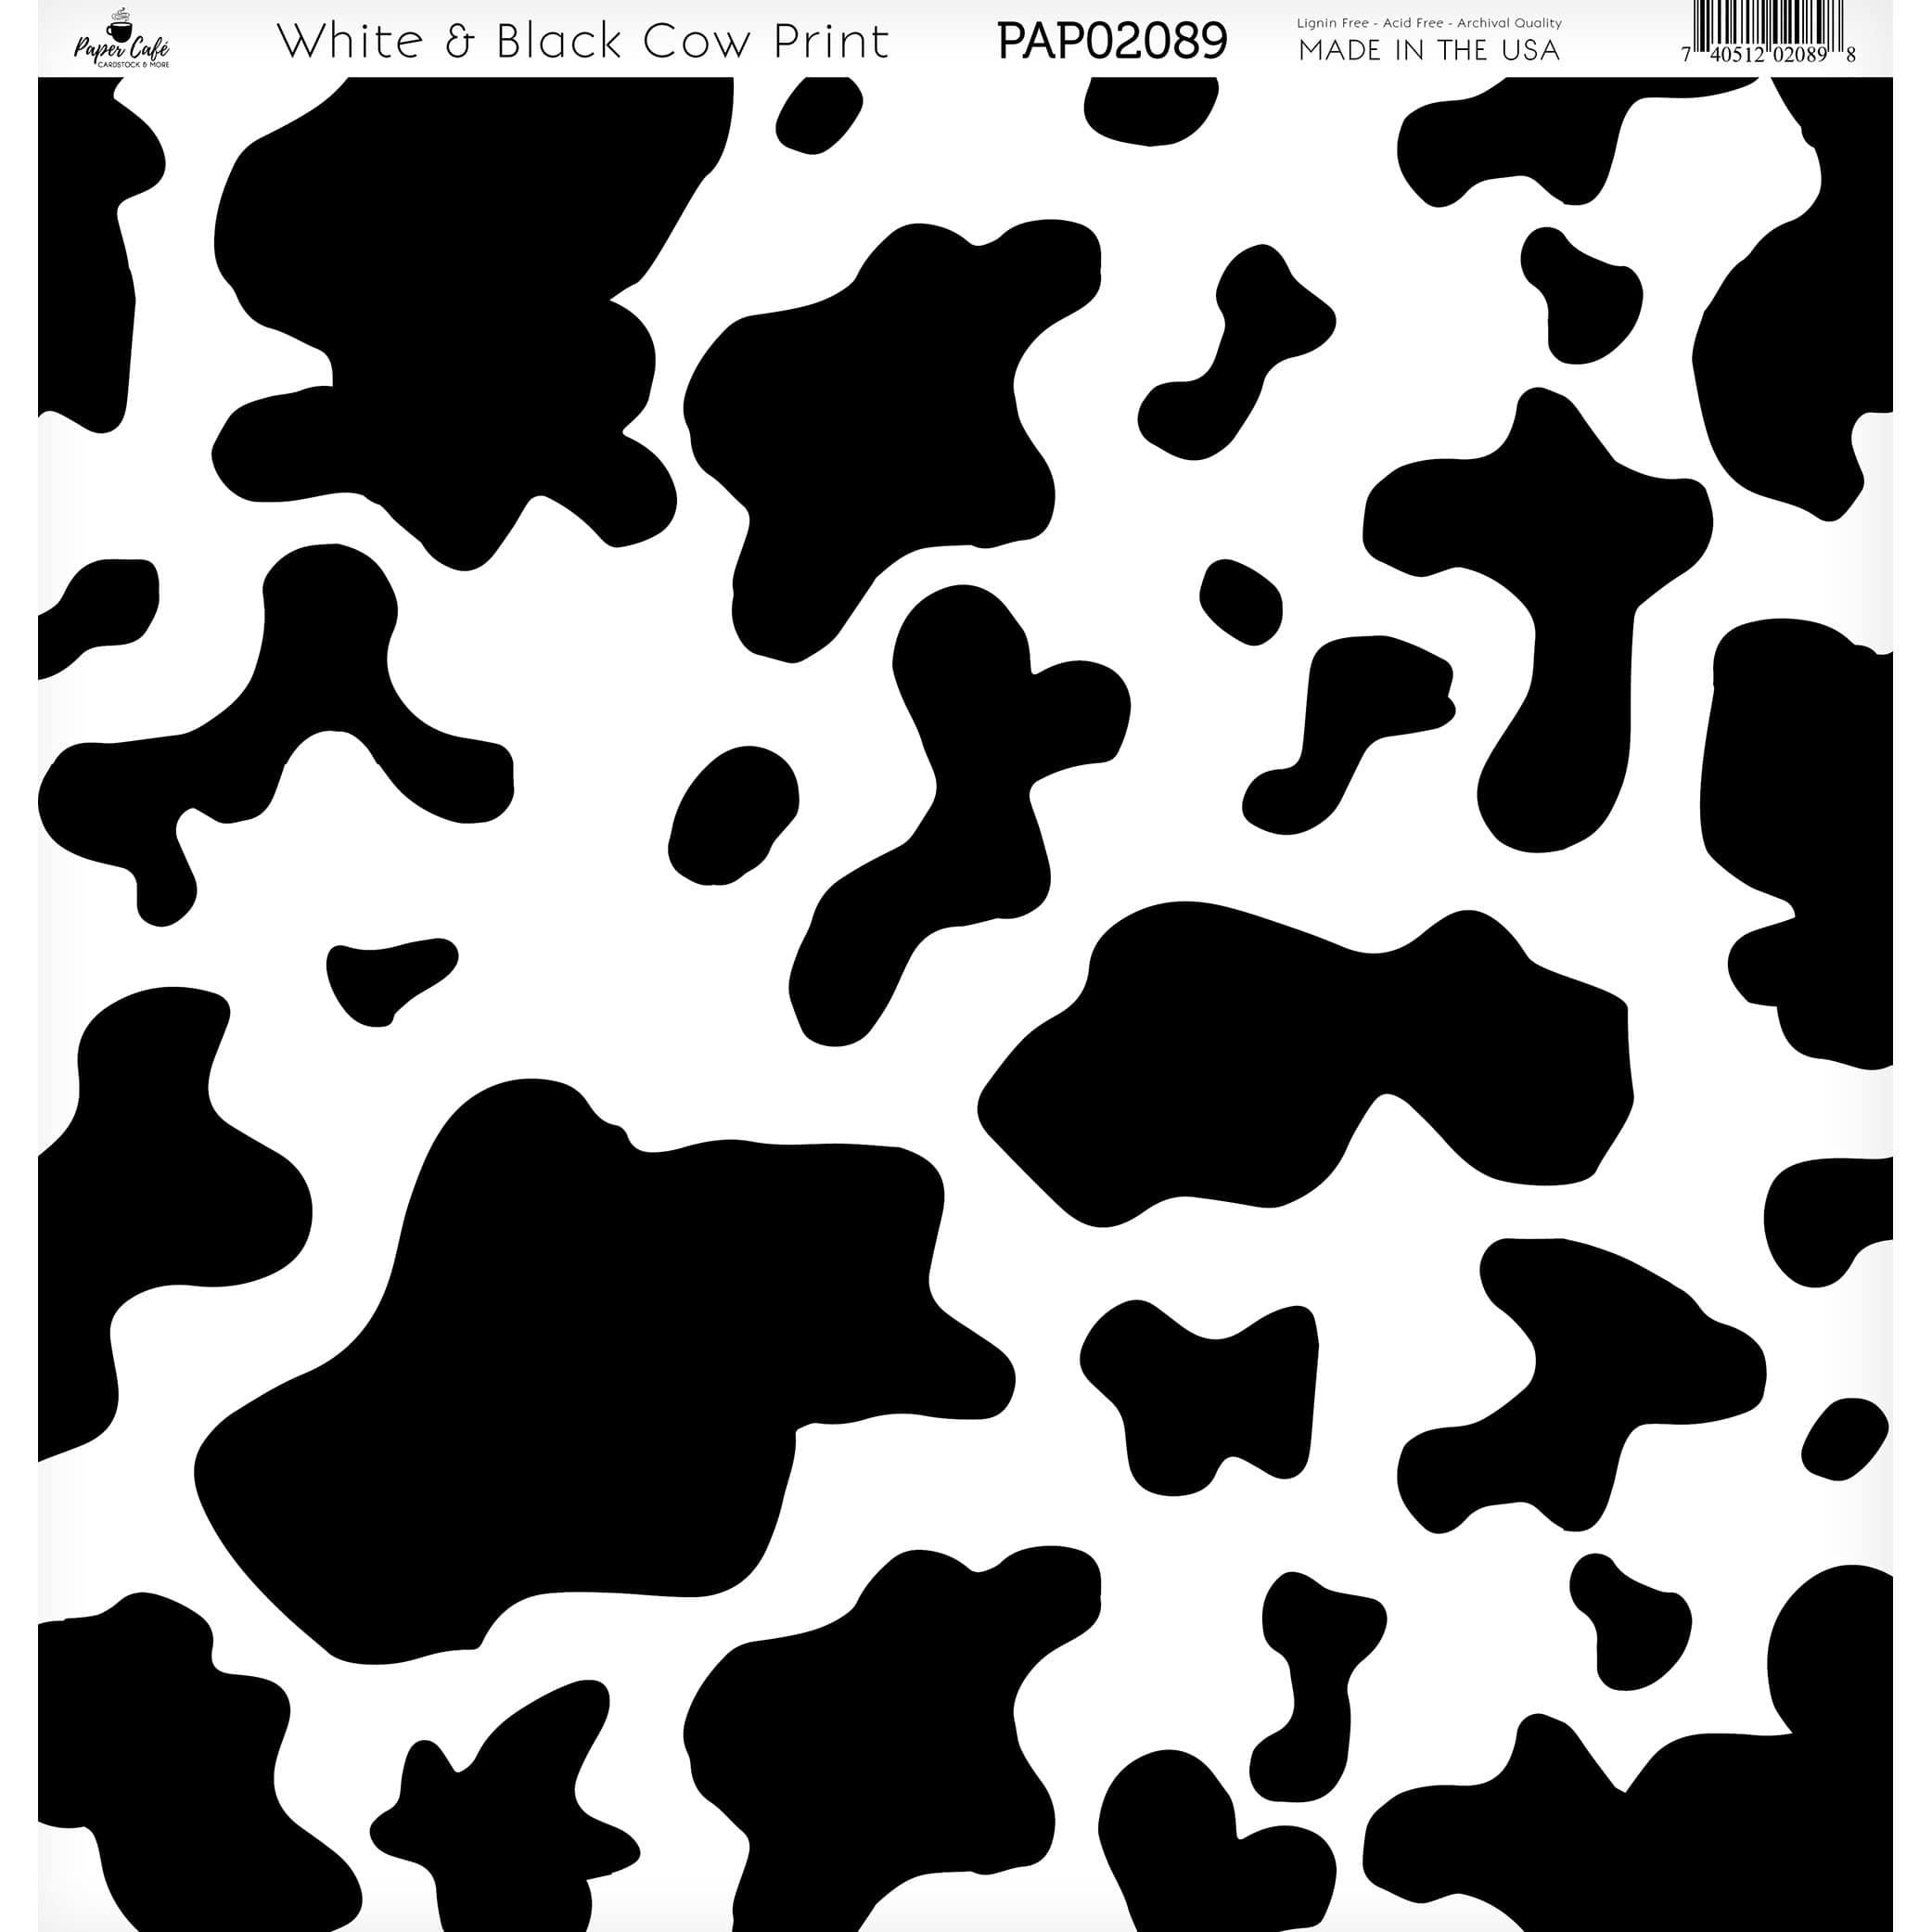 Cow Print Black White 18 2 Planner Calendar Scrapbooking Crafting